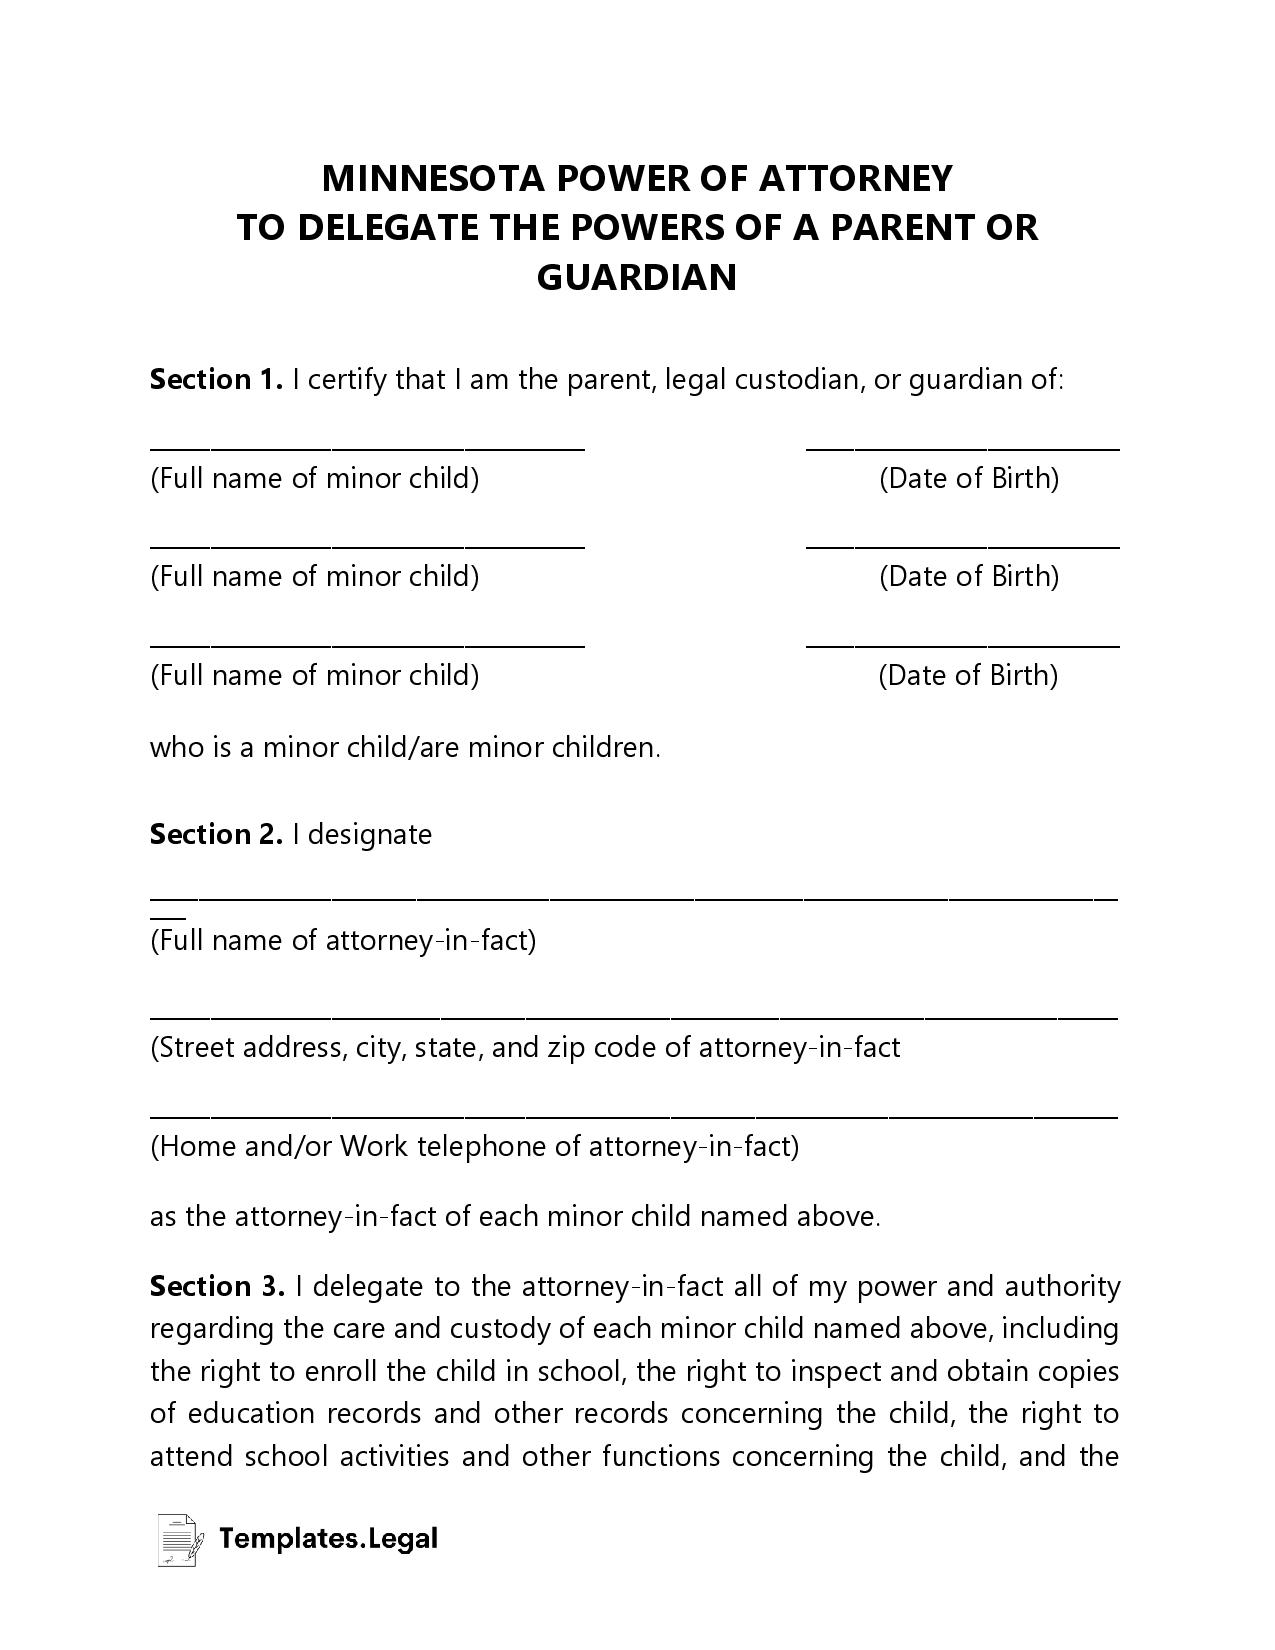 Minnesota Minor (Child) Power of Attorney - Templates.Legal